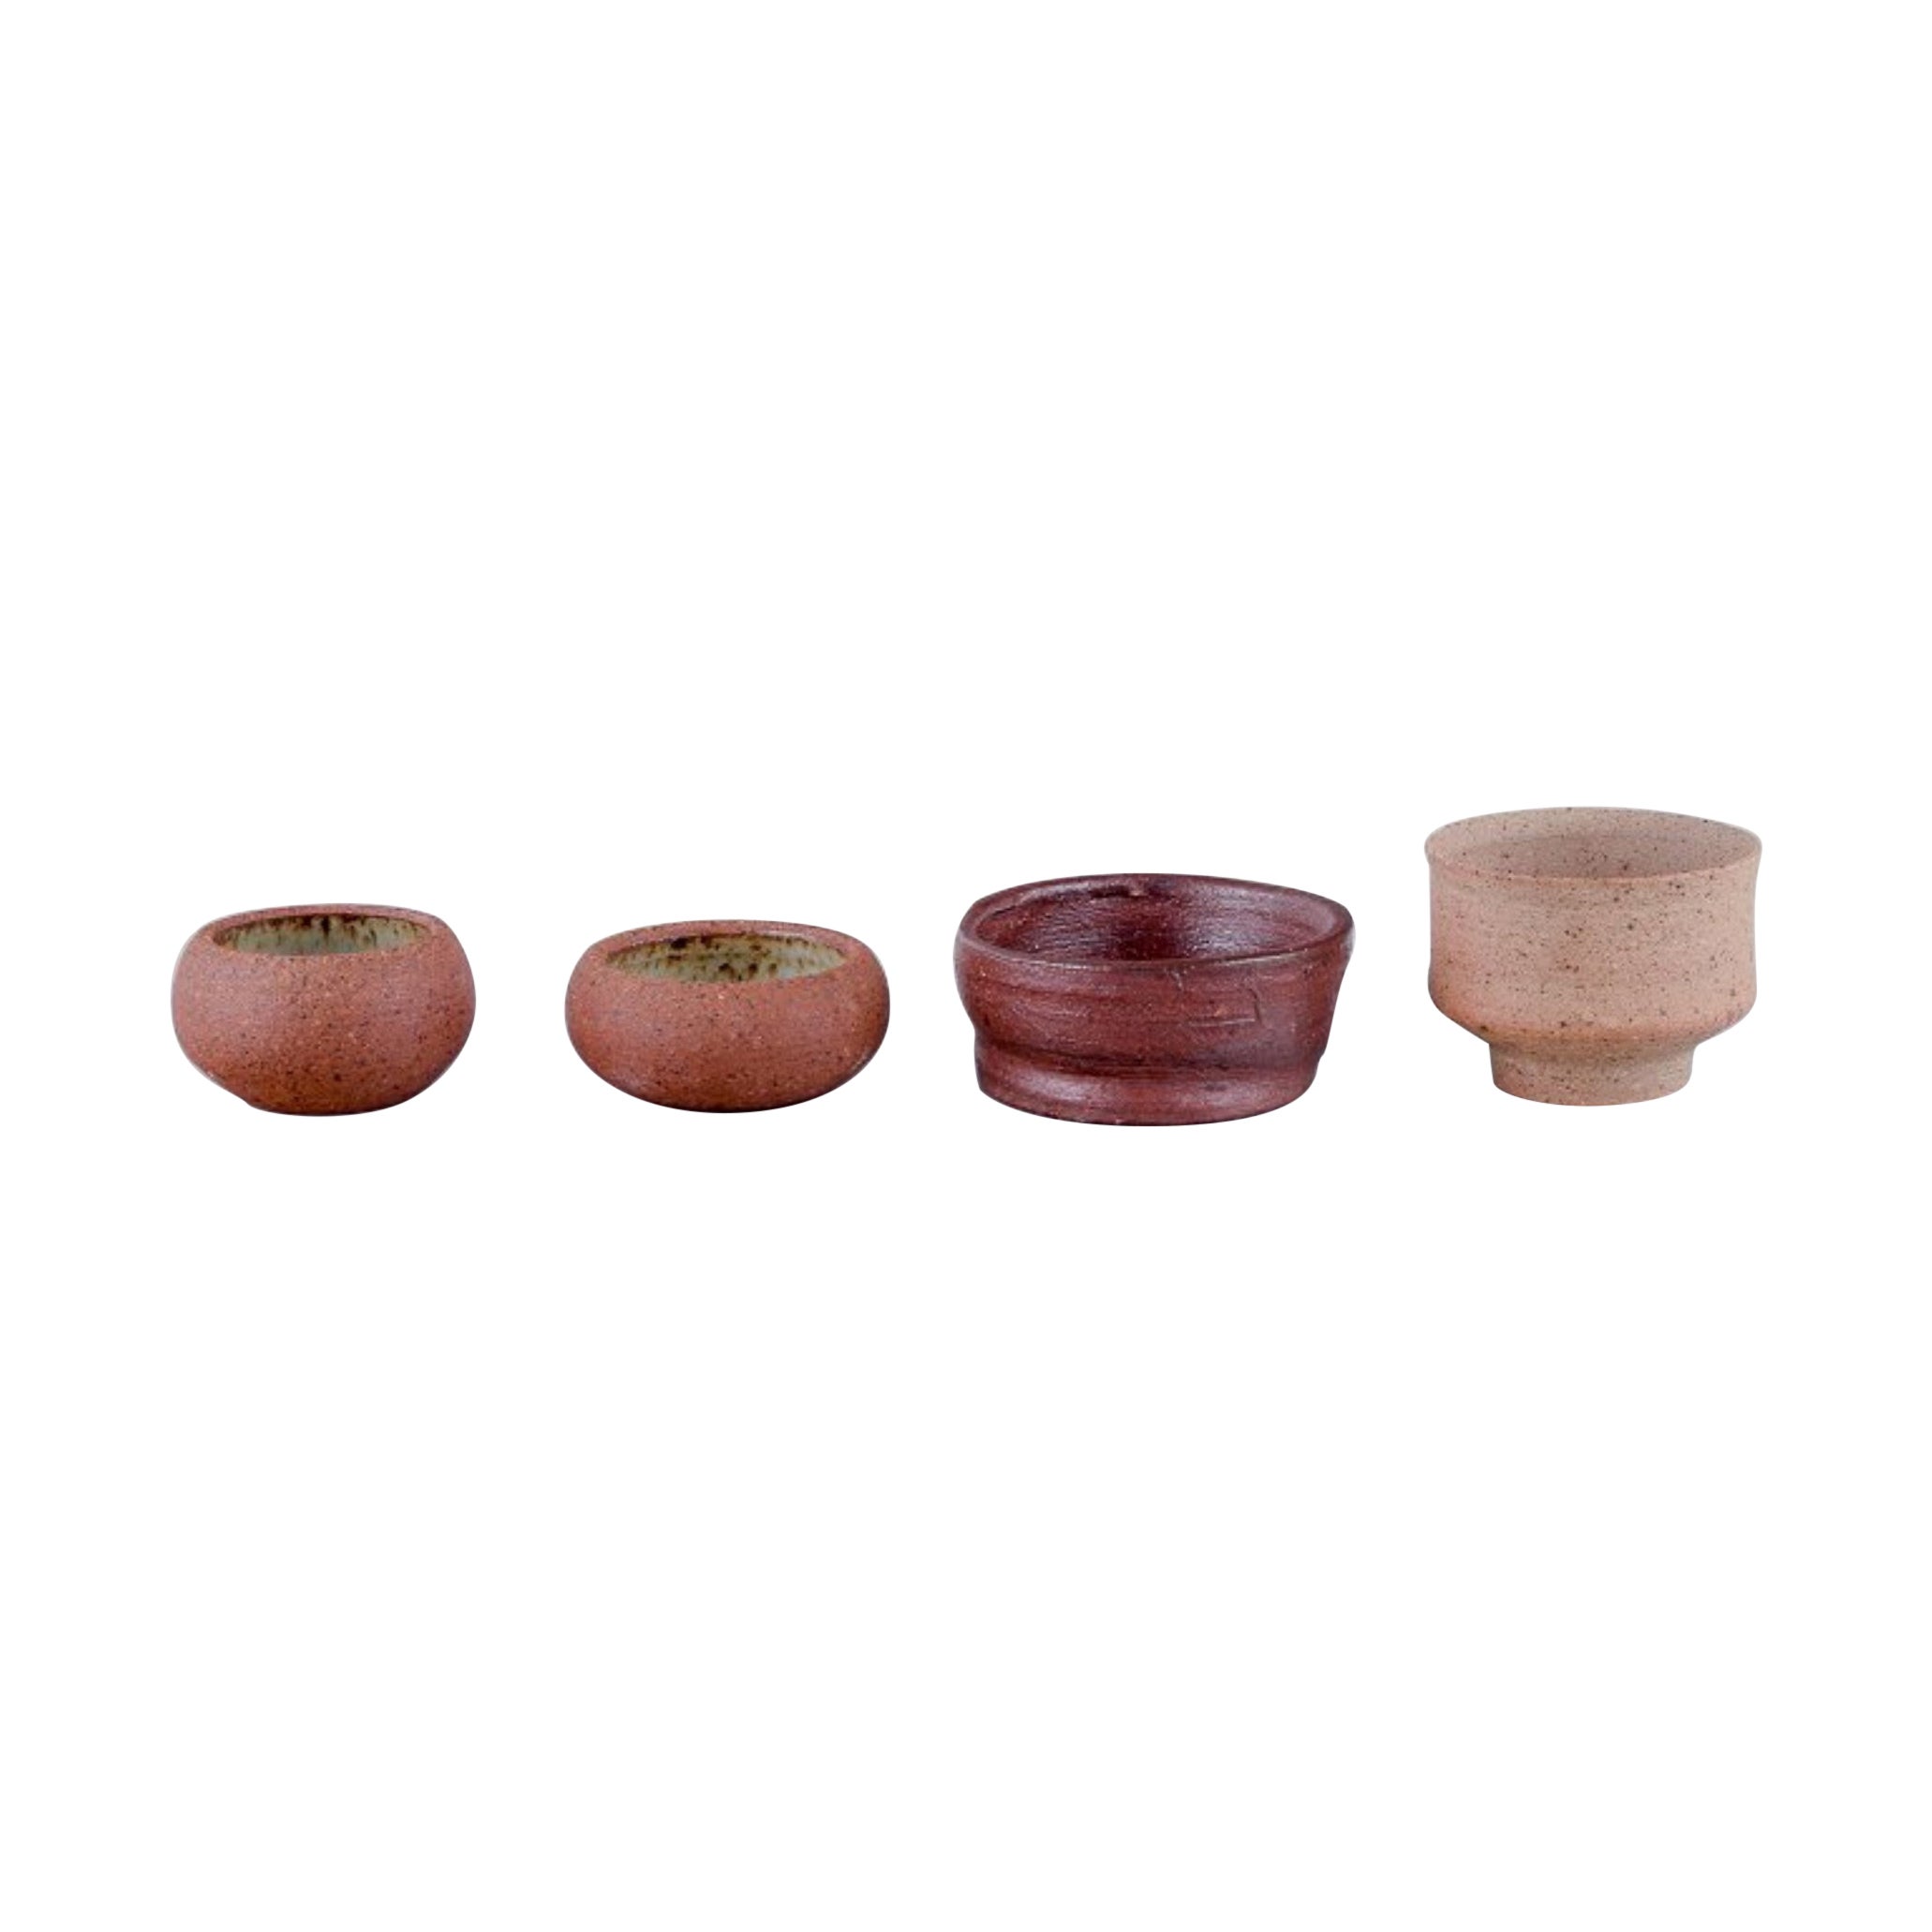 Mogens Nielsen, Nysted / Stouby Keramik und andere. Vier Pieces aus Keramik im Angebot